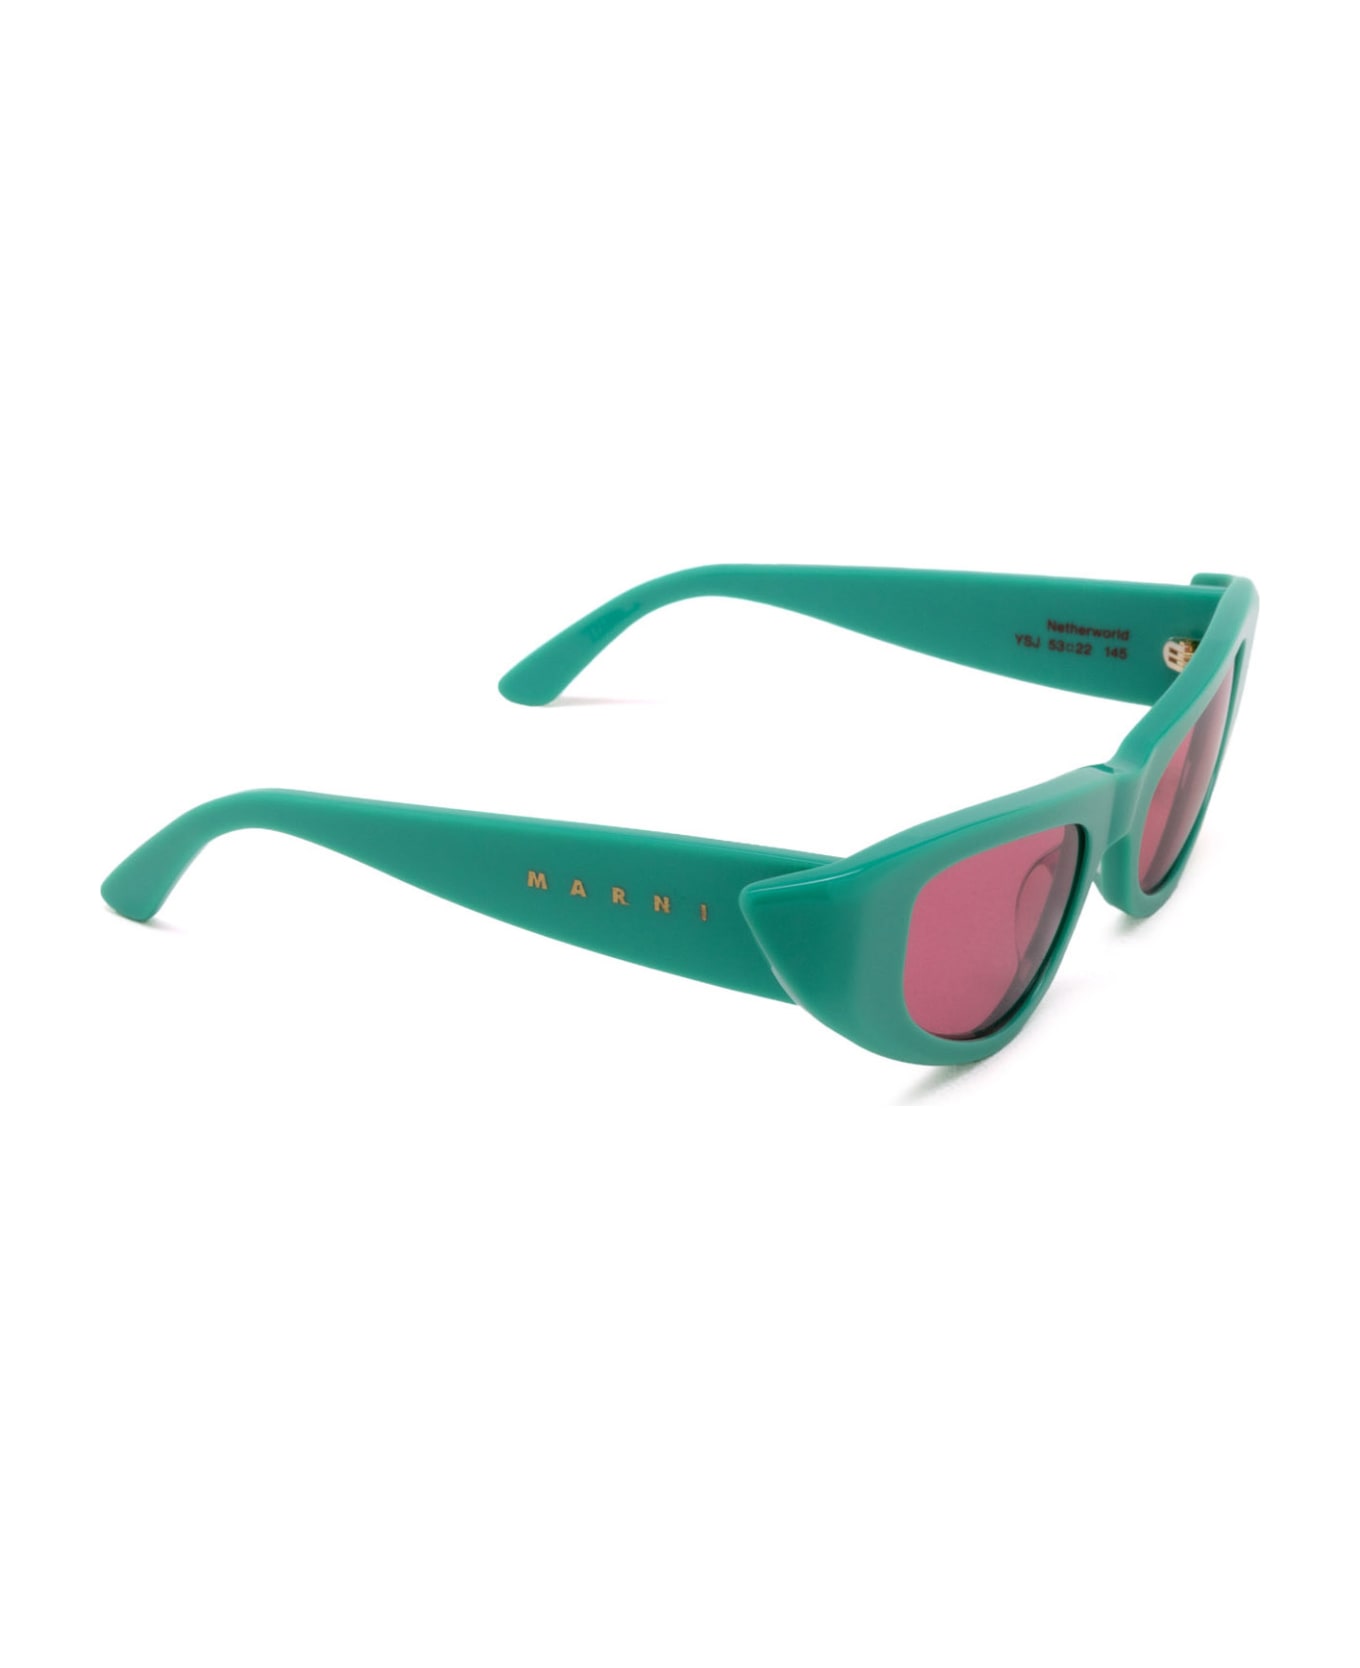 Marni Eyewear Netherworld Green Sunglasses - Green サングラス